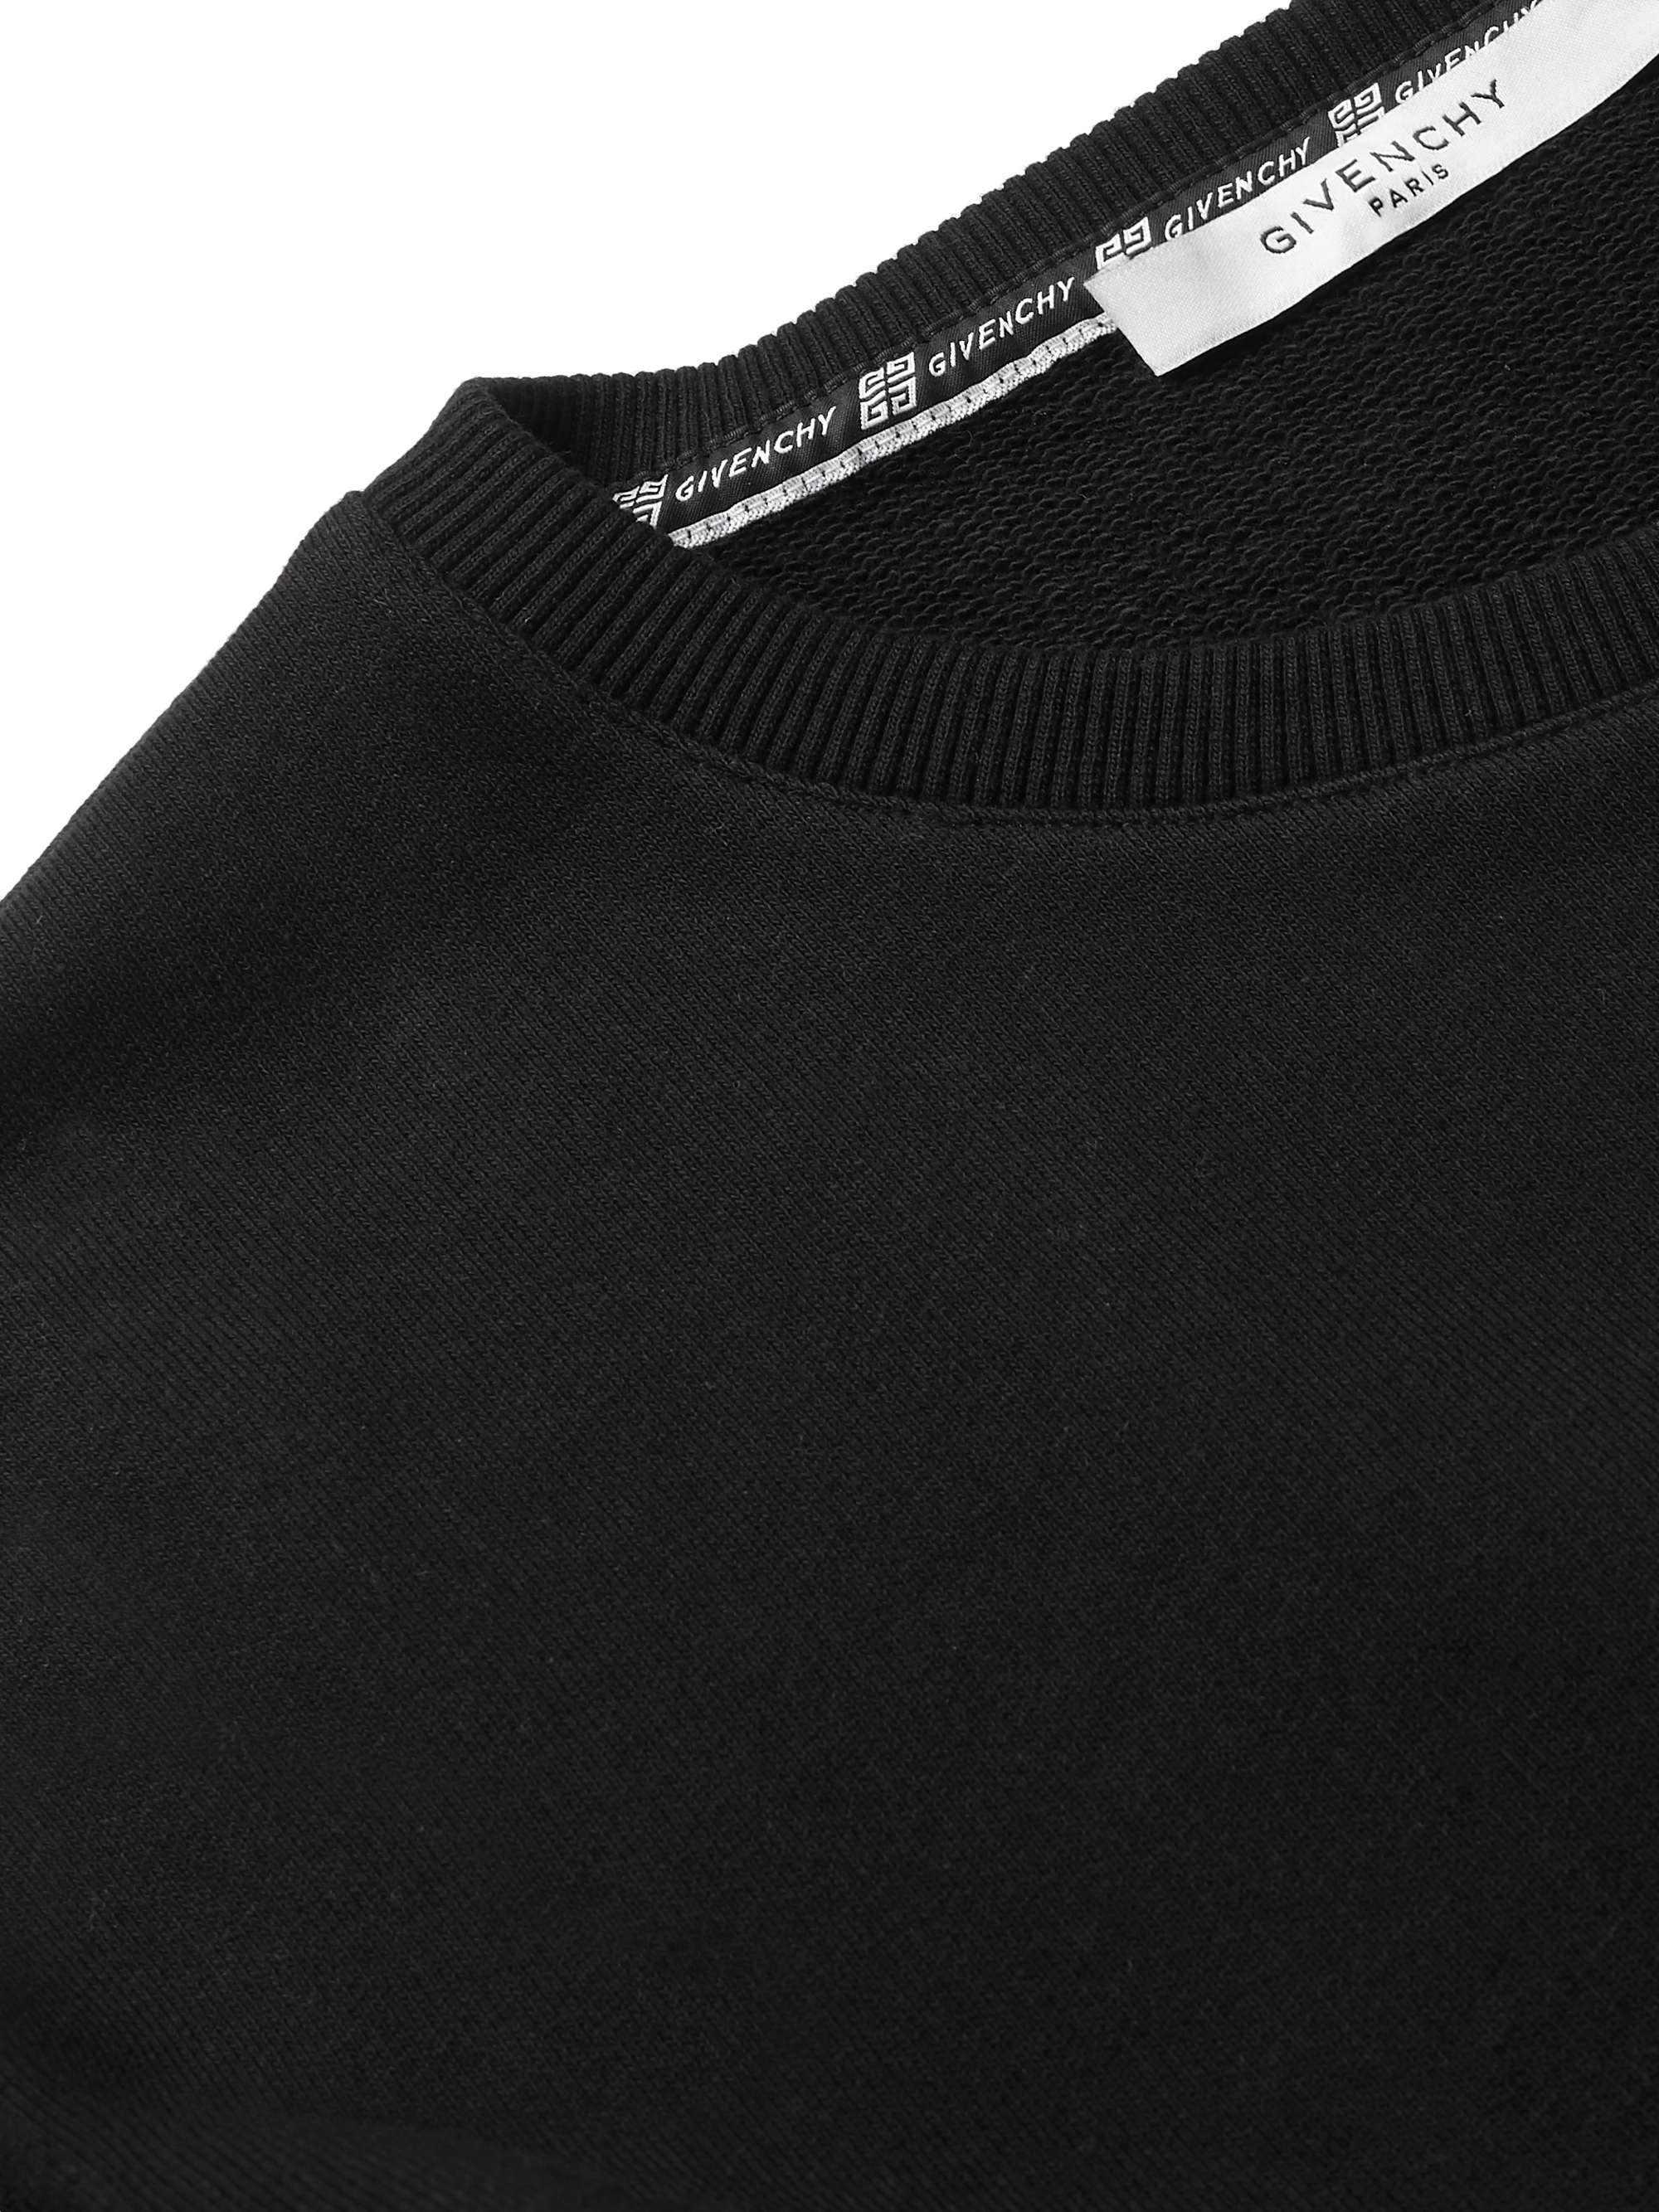 GIVENCHY Logo-Print Loopback Cotton-Jersey Sweatshirt for Men | MR PORTER